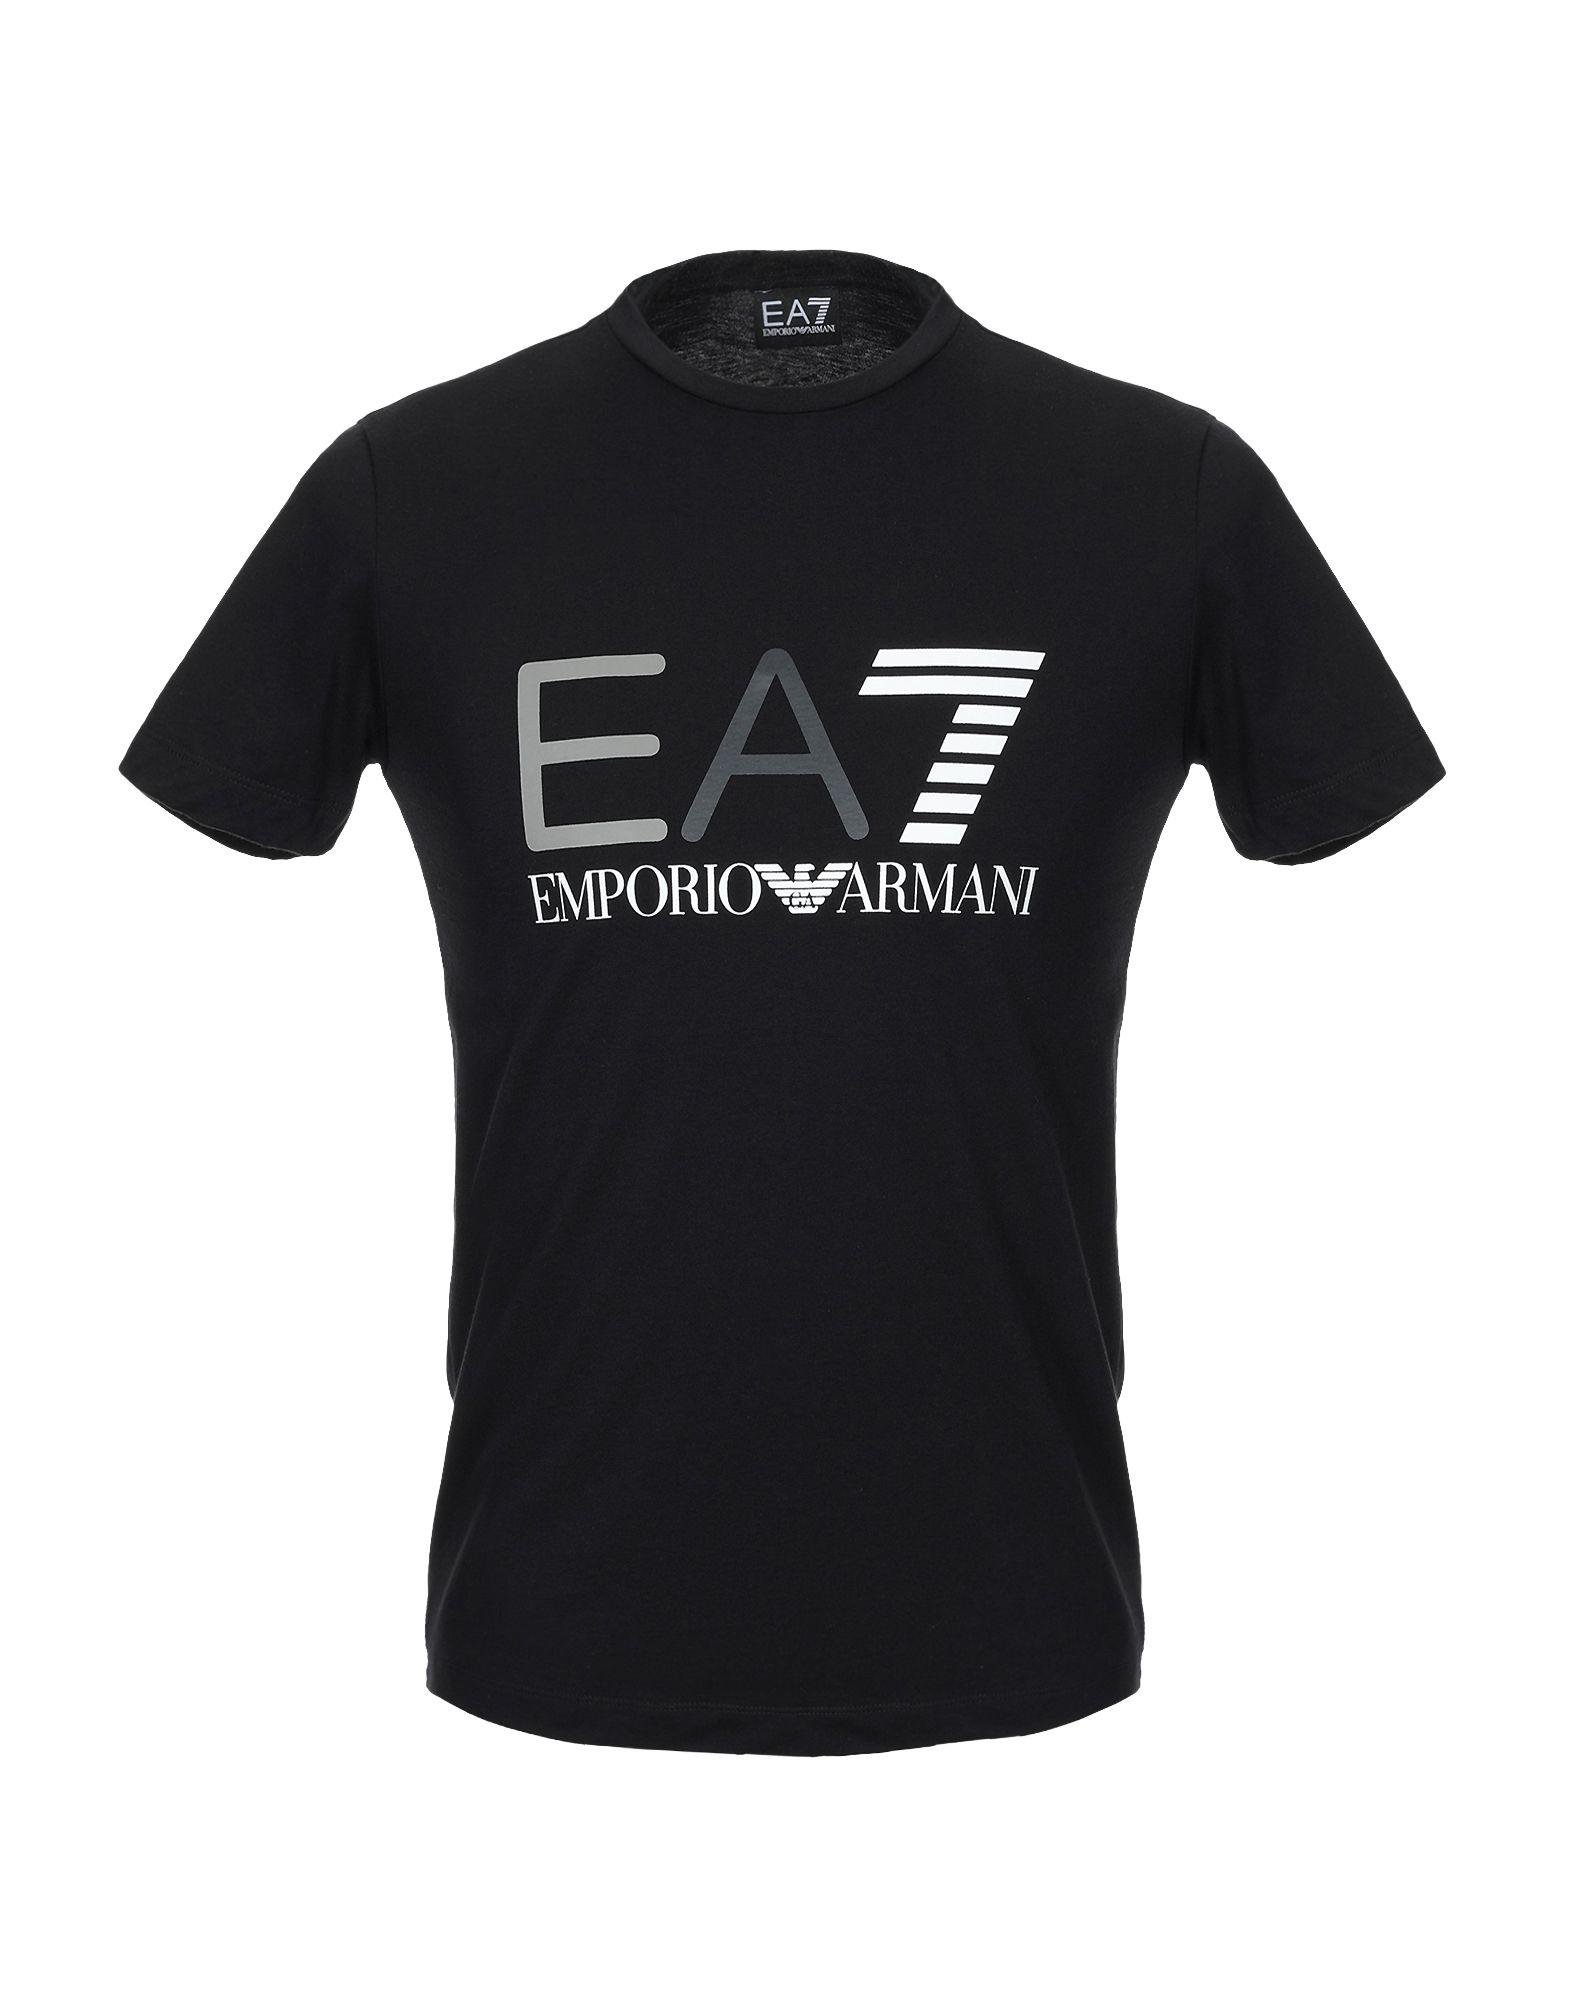 Lyst - EA7 T-shirt in Black for Men